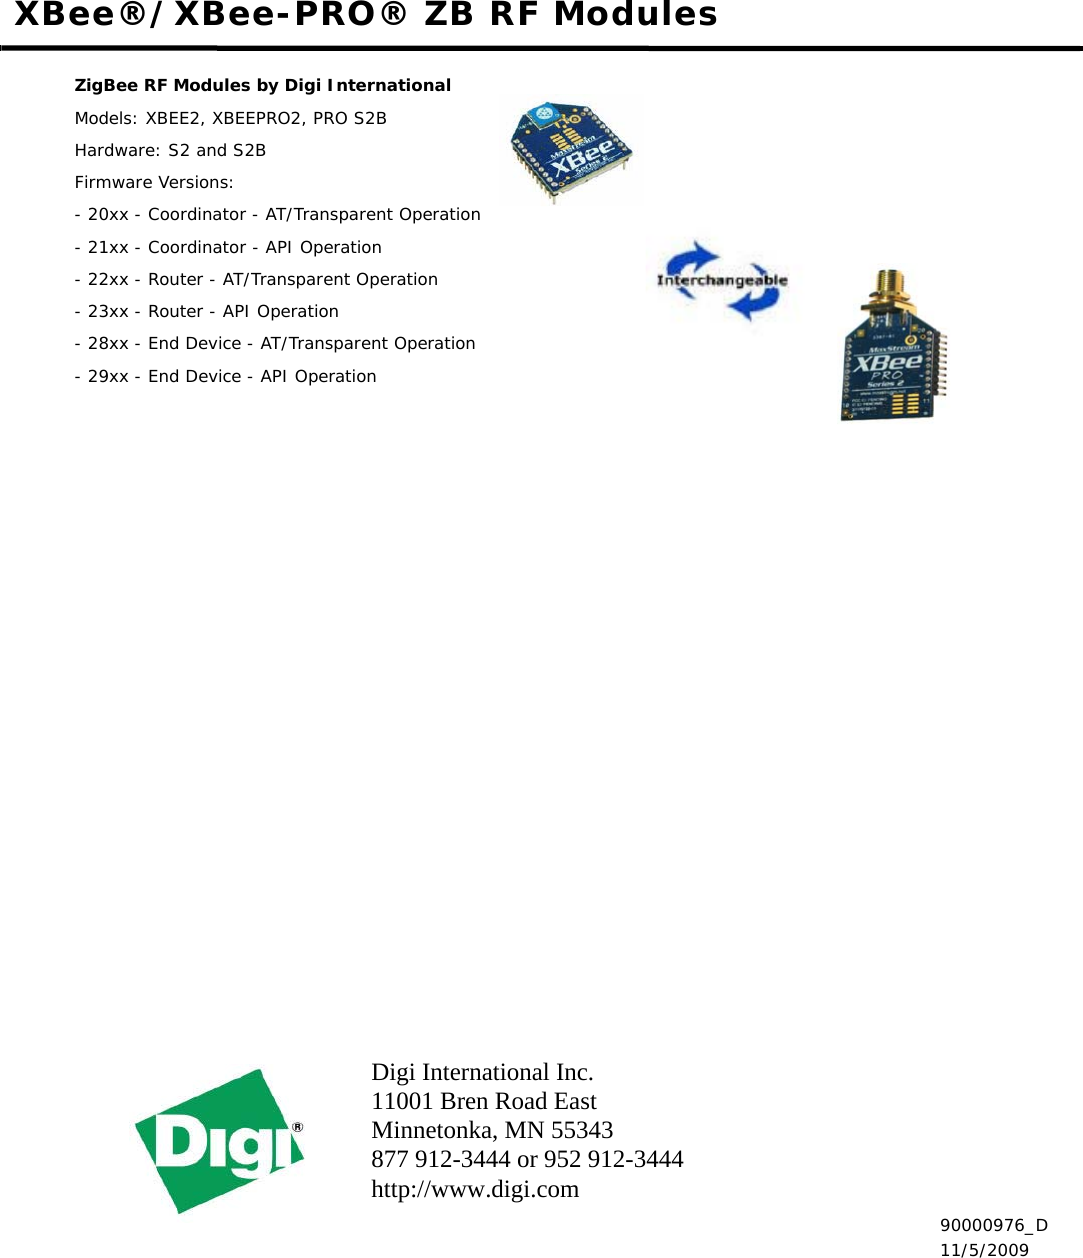 Digi International Inc.11001 Bren Road EastMinnetonka, MN 55343 877 912-3444 or 952 912-3444 http://www.digi.com XBee®/XBee-PRO® ZB RF ModulesZigBee RF Modules by Digi InternationalModels: XBEE2, XBEEPRO2, PRO S2BHardware: S2 and S2BFirmware Versions:- 20xx - Coordinator - AT/Transparent Operation- 21xx - Coordinator - API Operation- 22xx - Router - AT/Transparent Operation- 23xx - Router - API Operation- 28xx - End Device - AT/Transparent Operation- 29xx - End Device - API Operation 90000976_D 11/5/2009